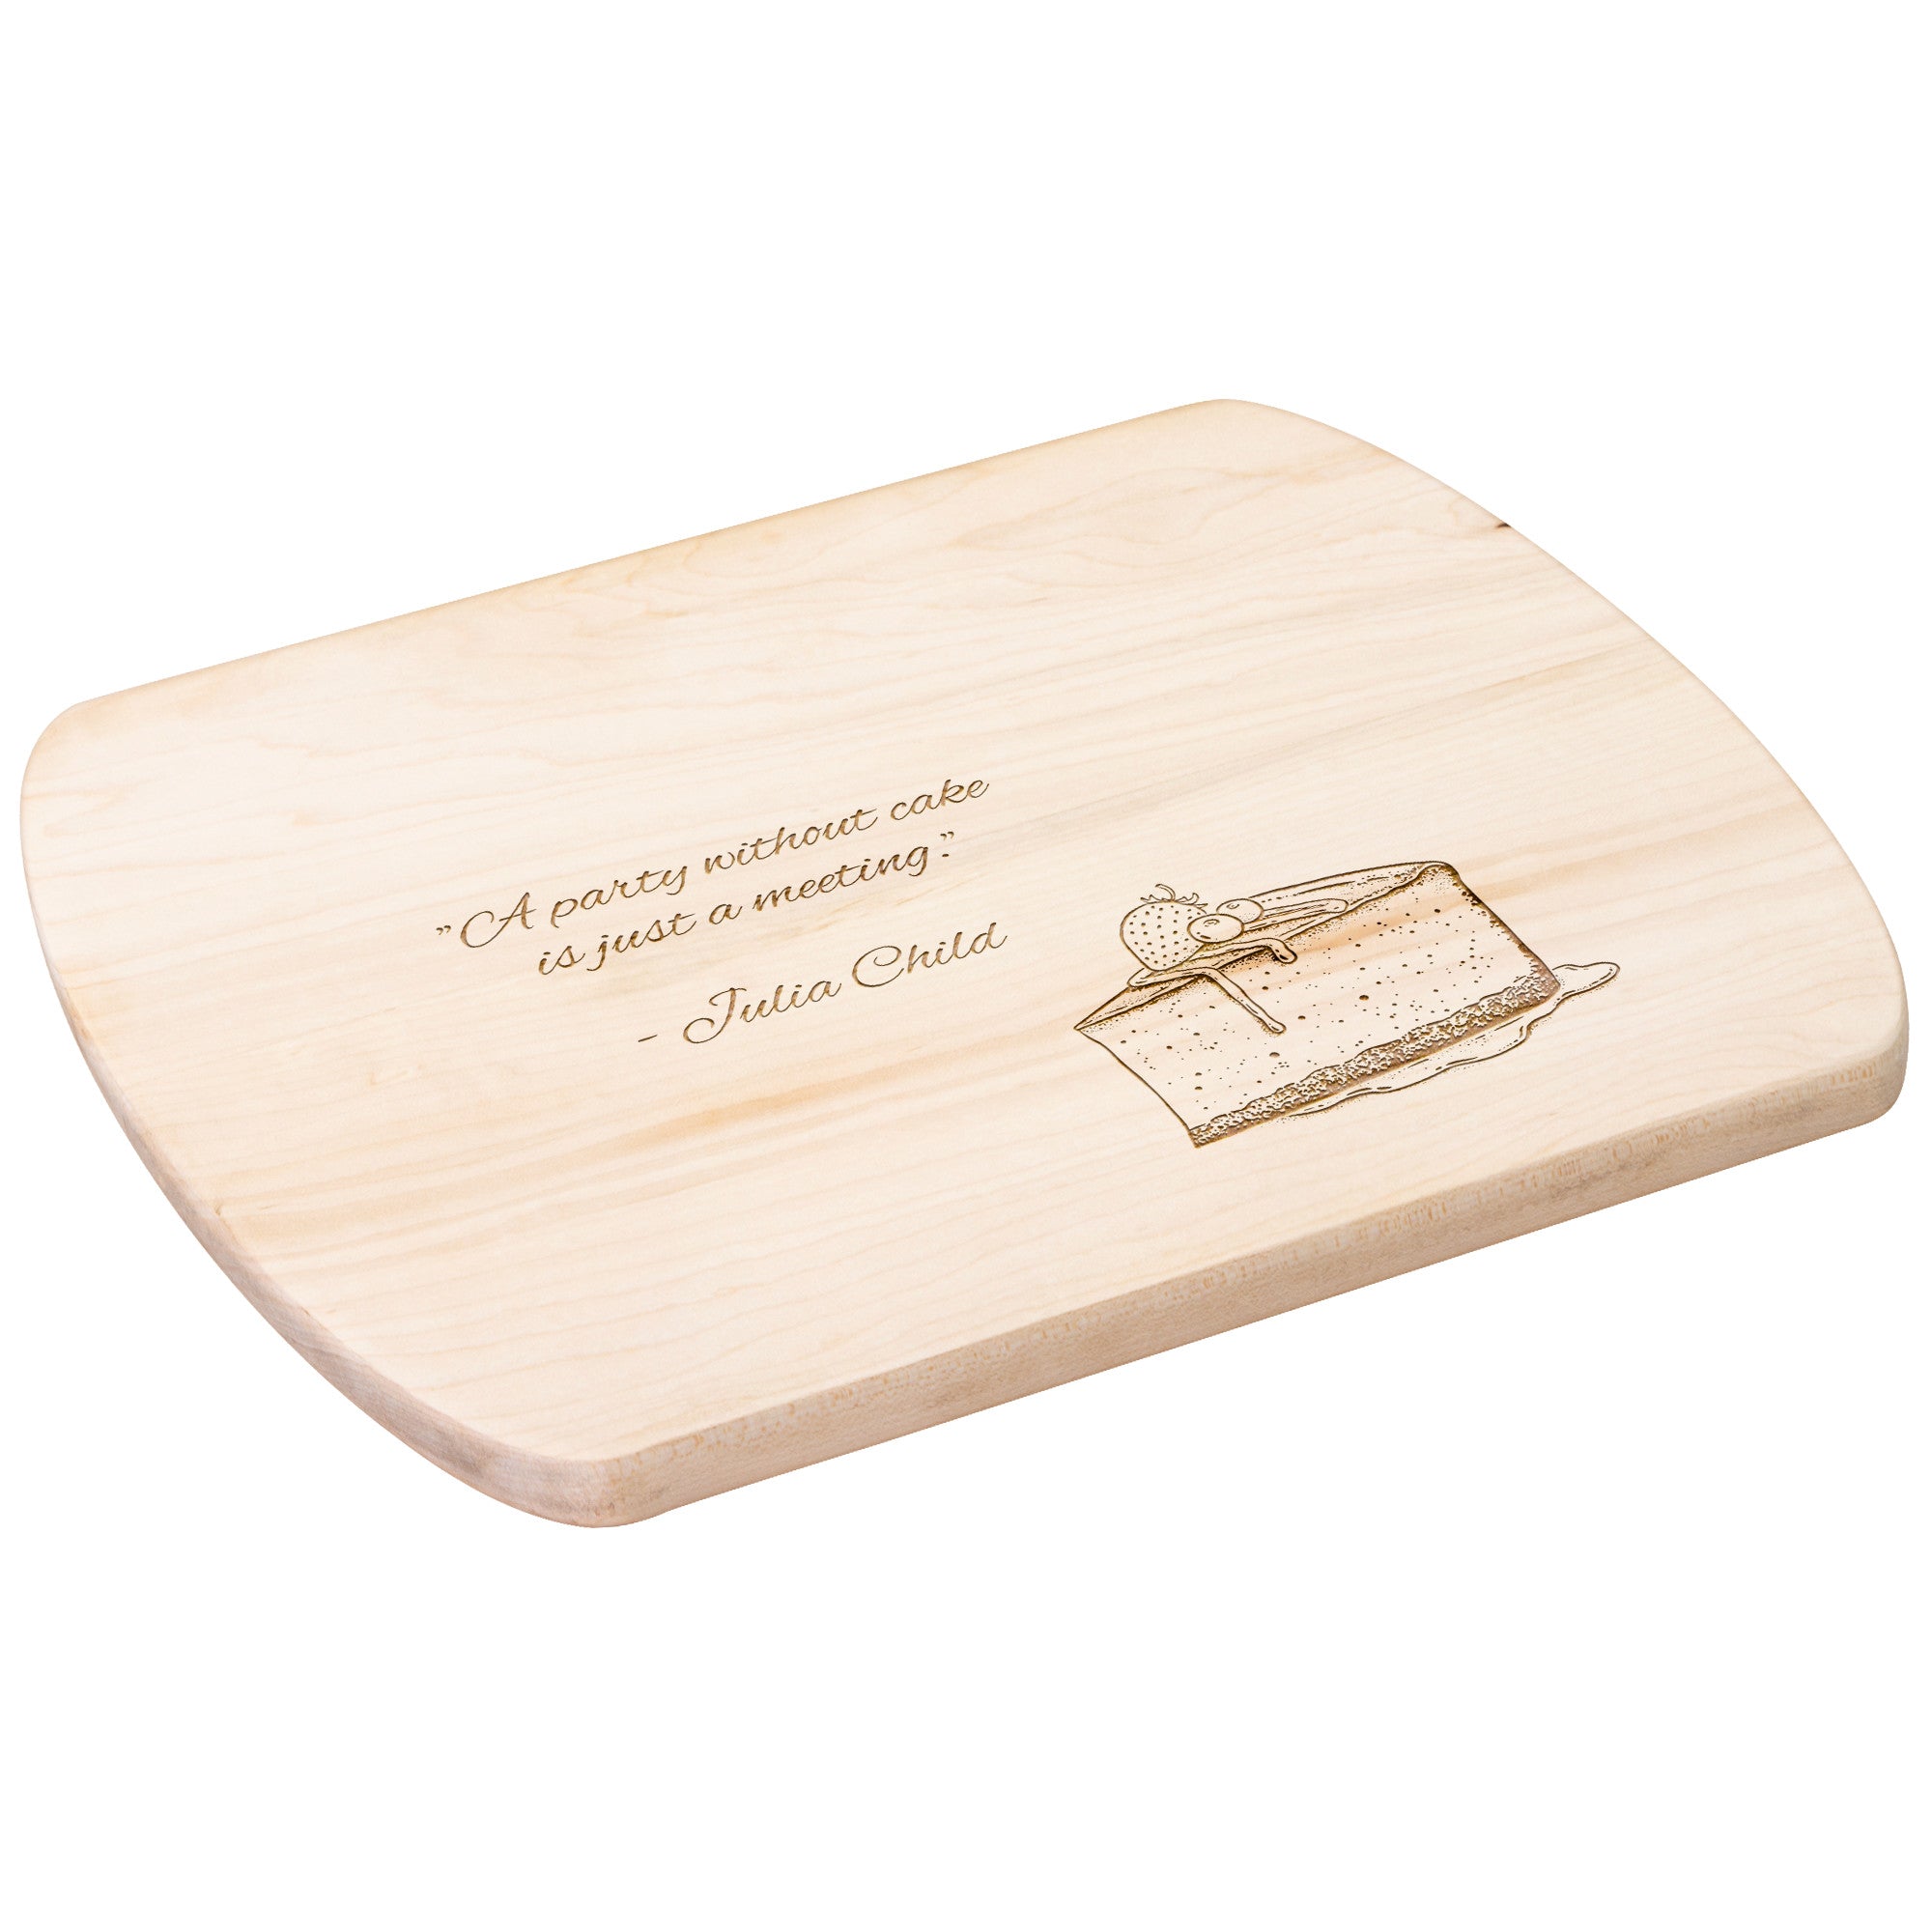 Hardwood Oval Cutting Board - Variant 03